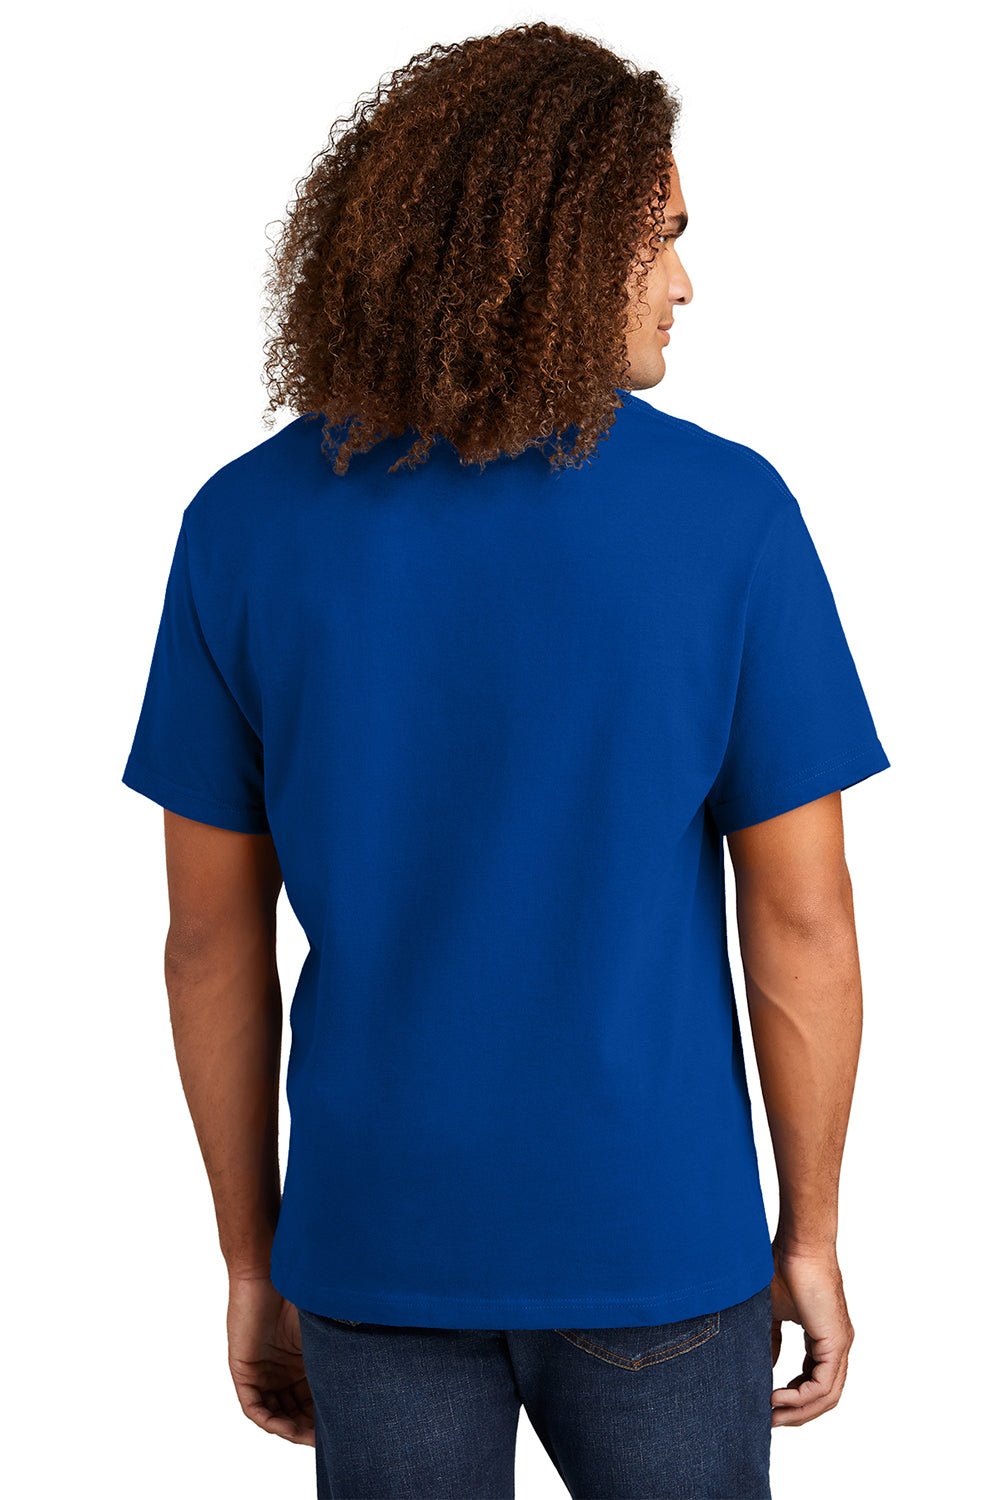 American Apparel 1301/AL1301 Mens Short Sleeve Crewneck T-Shirt Royal Blue Model Back